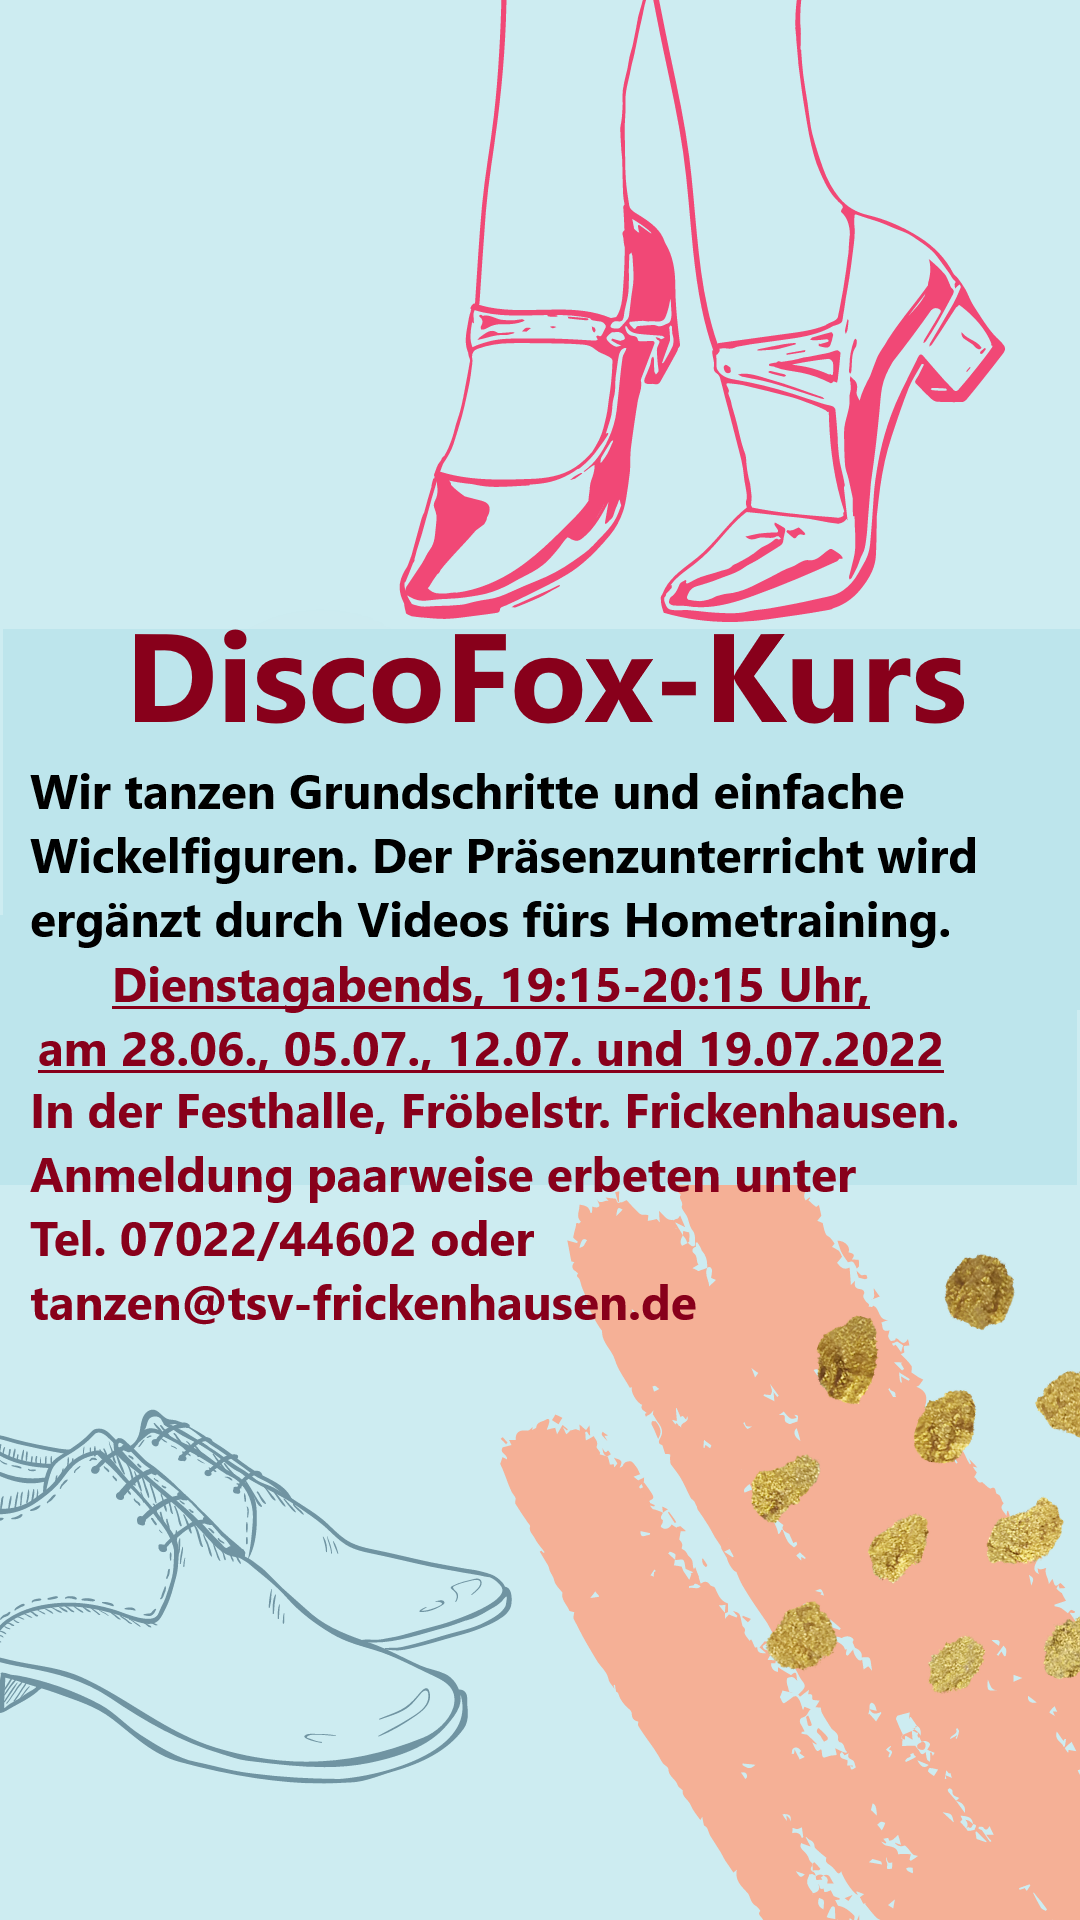 DiscoFox-Kurs